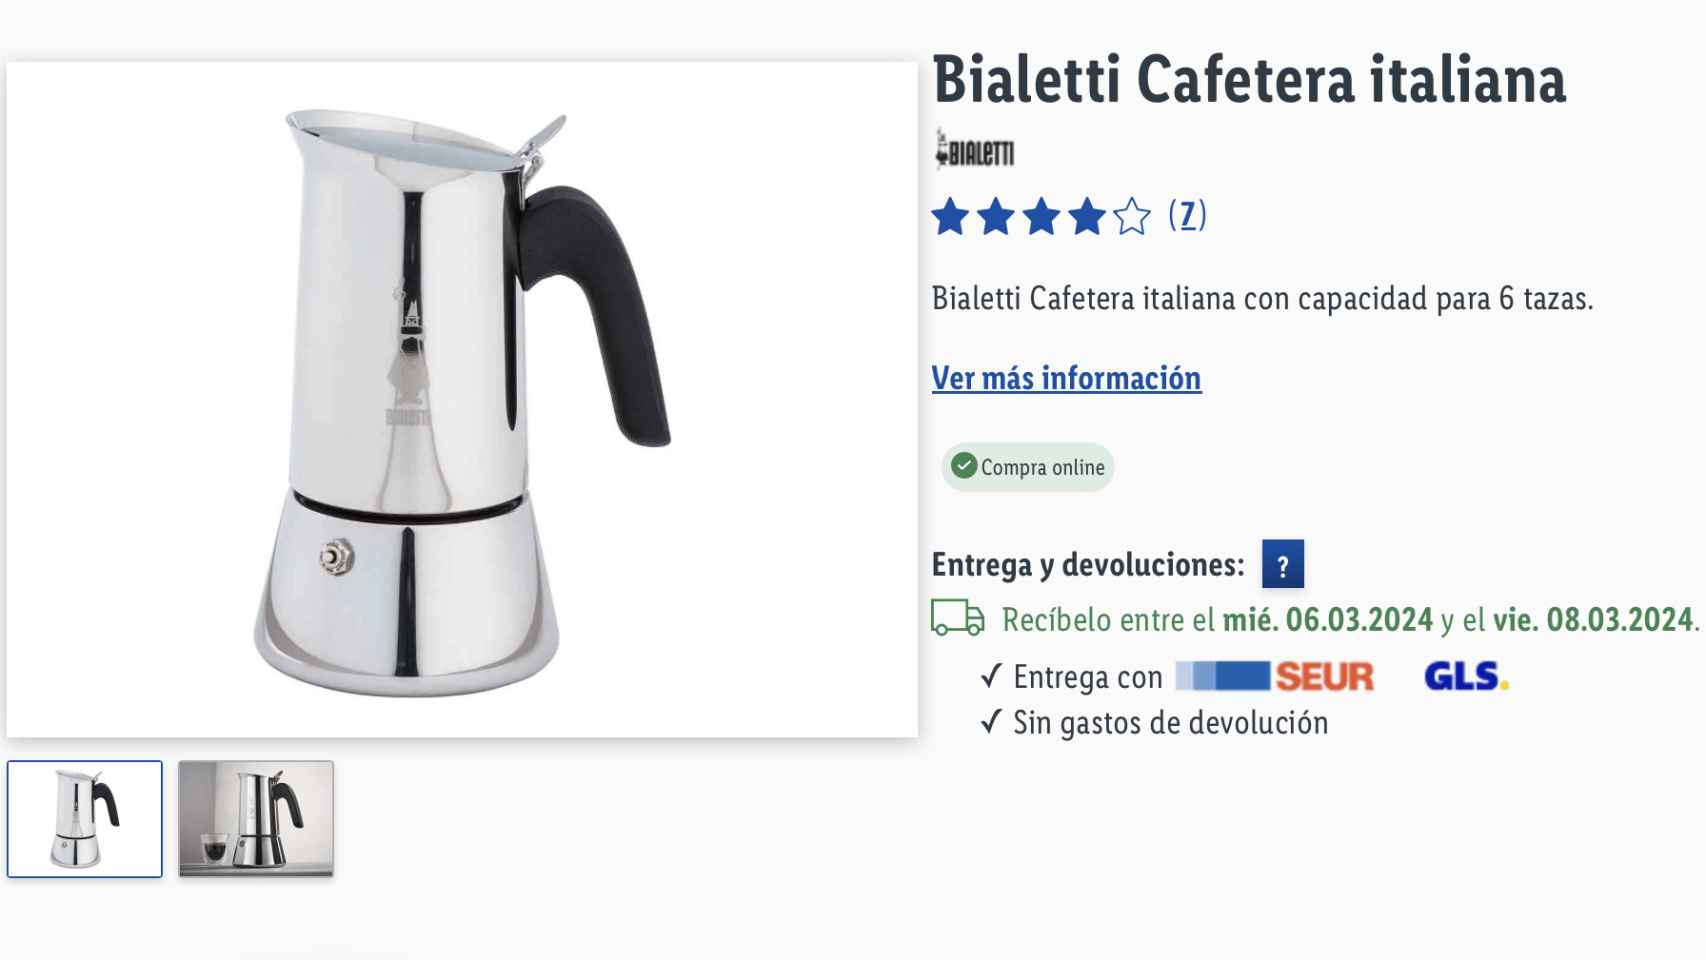 Bialetti Cafetera italiana.